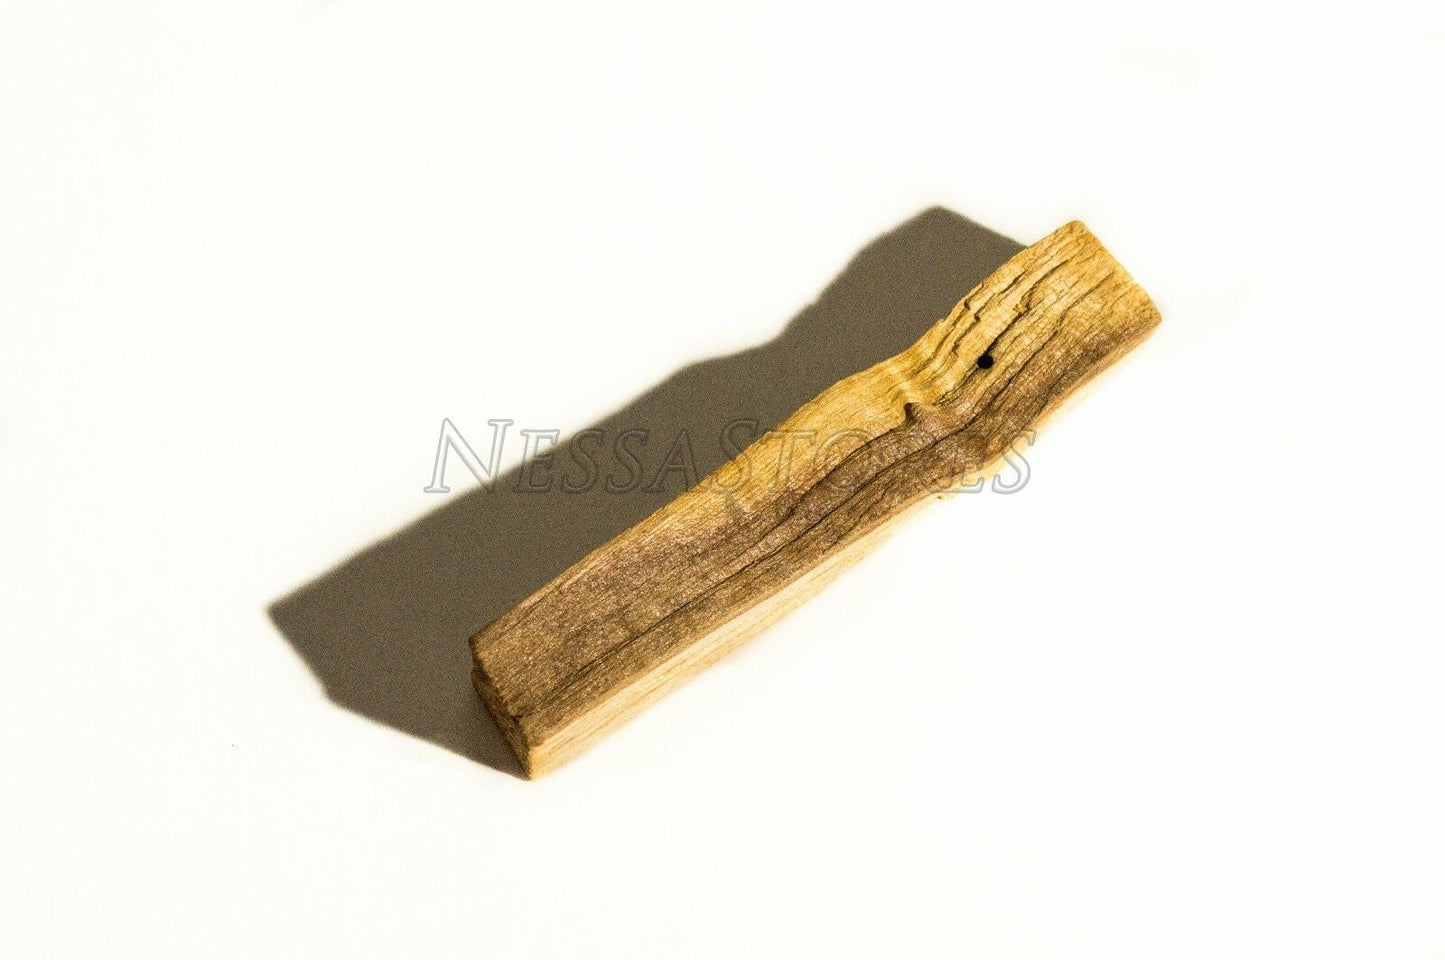 NessaStores Palo Santo Holy Wood Incense Sticks Peruvian ( 15 pcs) #JC-65